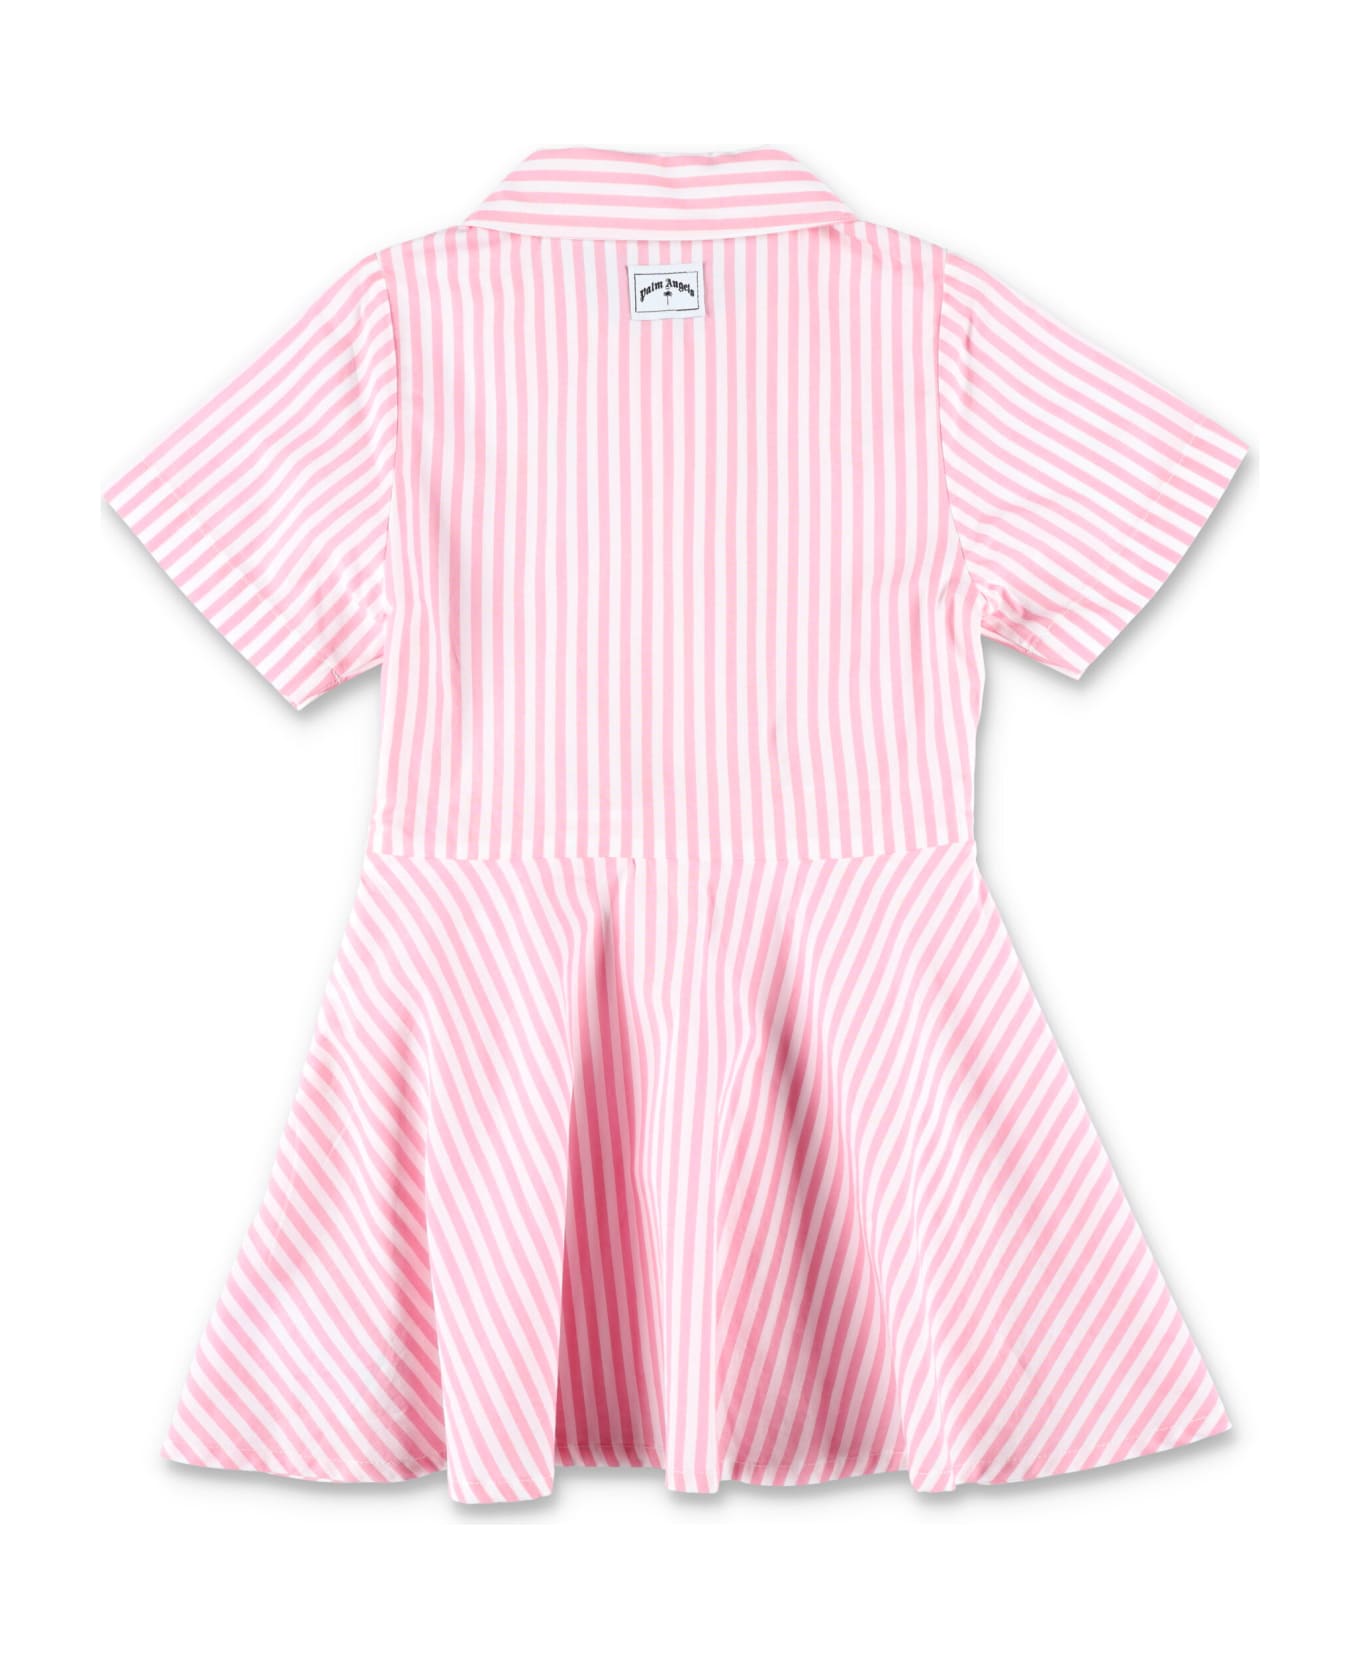 Palm Angels 3 Palms Striped Shirt Dress - PINK WHITE STRIPES ワンピース＆ドレス